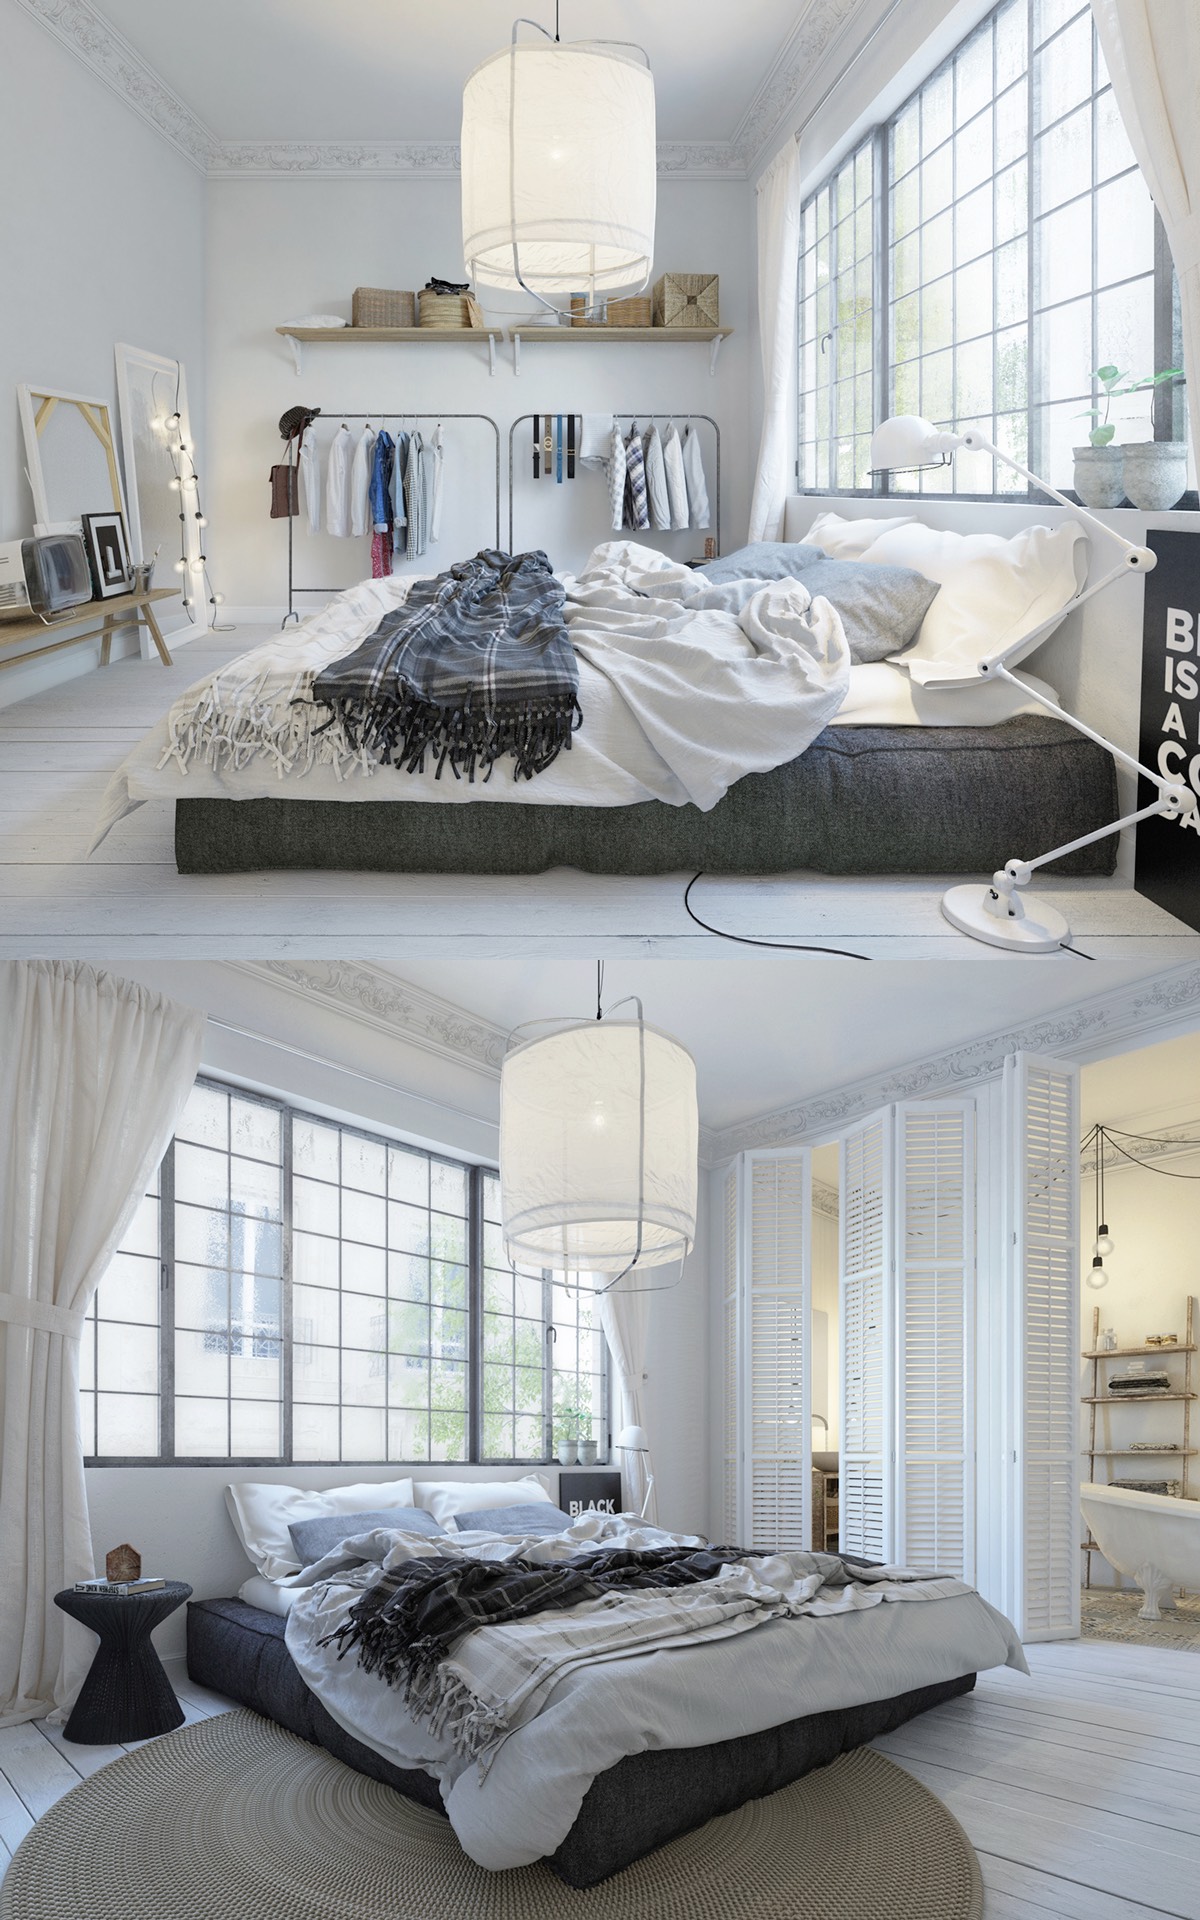 Scandinavian simple white designs "width =" 1200 "height =" 1920 "srcset =" https://mileray.com/wp-content/uploads/2020/05/1588510523_797_Scandinavian-Bedroom-Design-Dominant-With-White-Color-Theme.jpg 1200w, https://mileray.com /wp-content/uploads/2016/07/Aleksandra-Nuzhnaya-188x300.jpg 188w, https://mileray.com/wp-content/uploads/2016/07/Aleksandra-Nuzhnaya-768x1229.jpg 768w, https: / /mileray.com/wp-content/uploads/2016/07/Aleksandra-Nuzhnaya-640x1024.jpg 640w, https://mileray.com/wp-content/uploads/2016/07/Aleksandra-Nuzhnaya-696x1114.jpg 696w , https://mileray.com/wp-content/uploads/2016/07/Aleksandra-Nuzhnaya-1068x1709.jpg 1068w, https://mileray.com/wp-content/uploads/2016/07/Aleksandra-Nuzhnaya- 263x420.jpg 263w "sizes =" (maximum width: 1200px) 100vw, 1200px